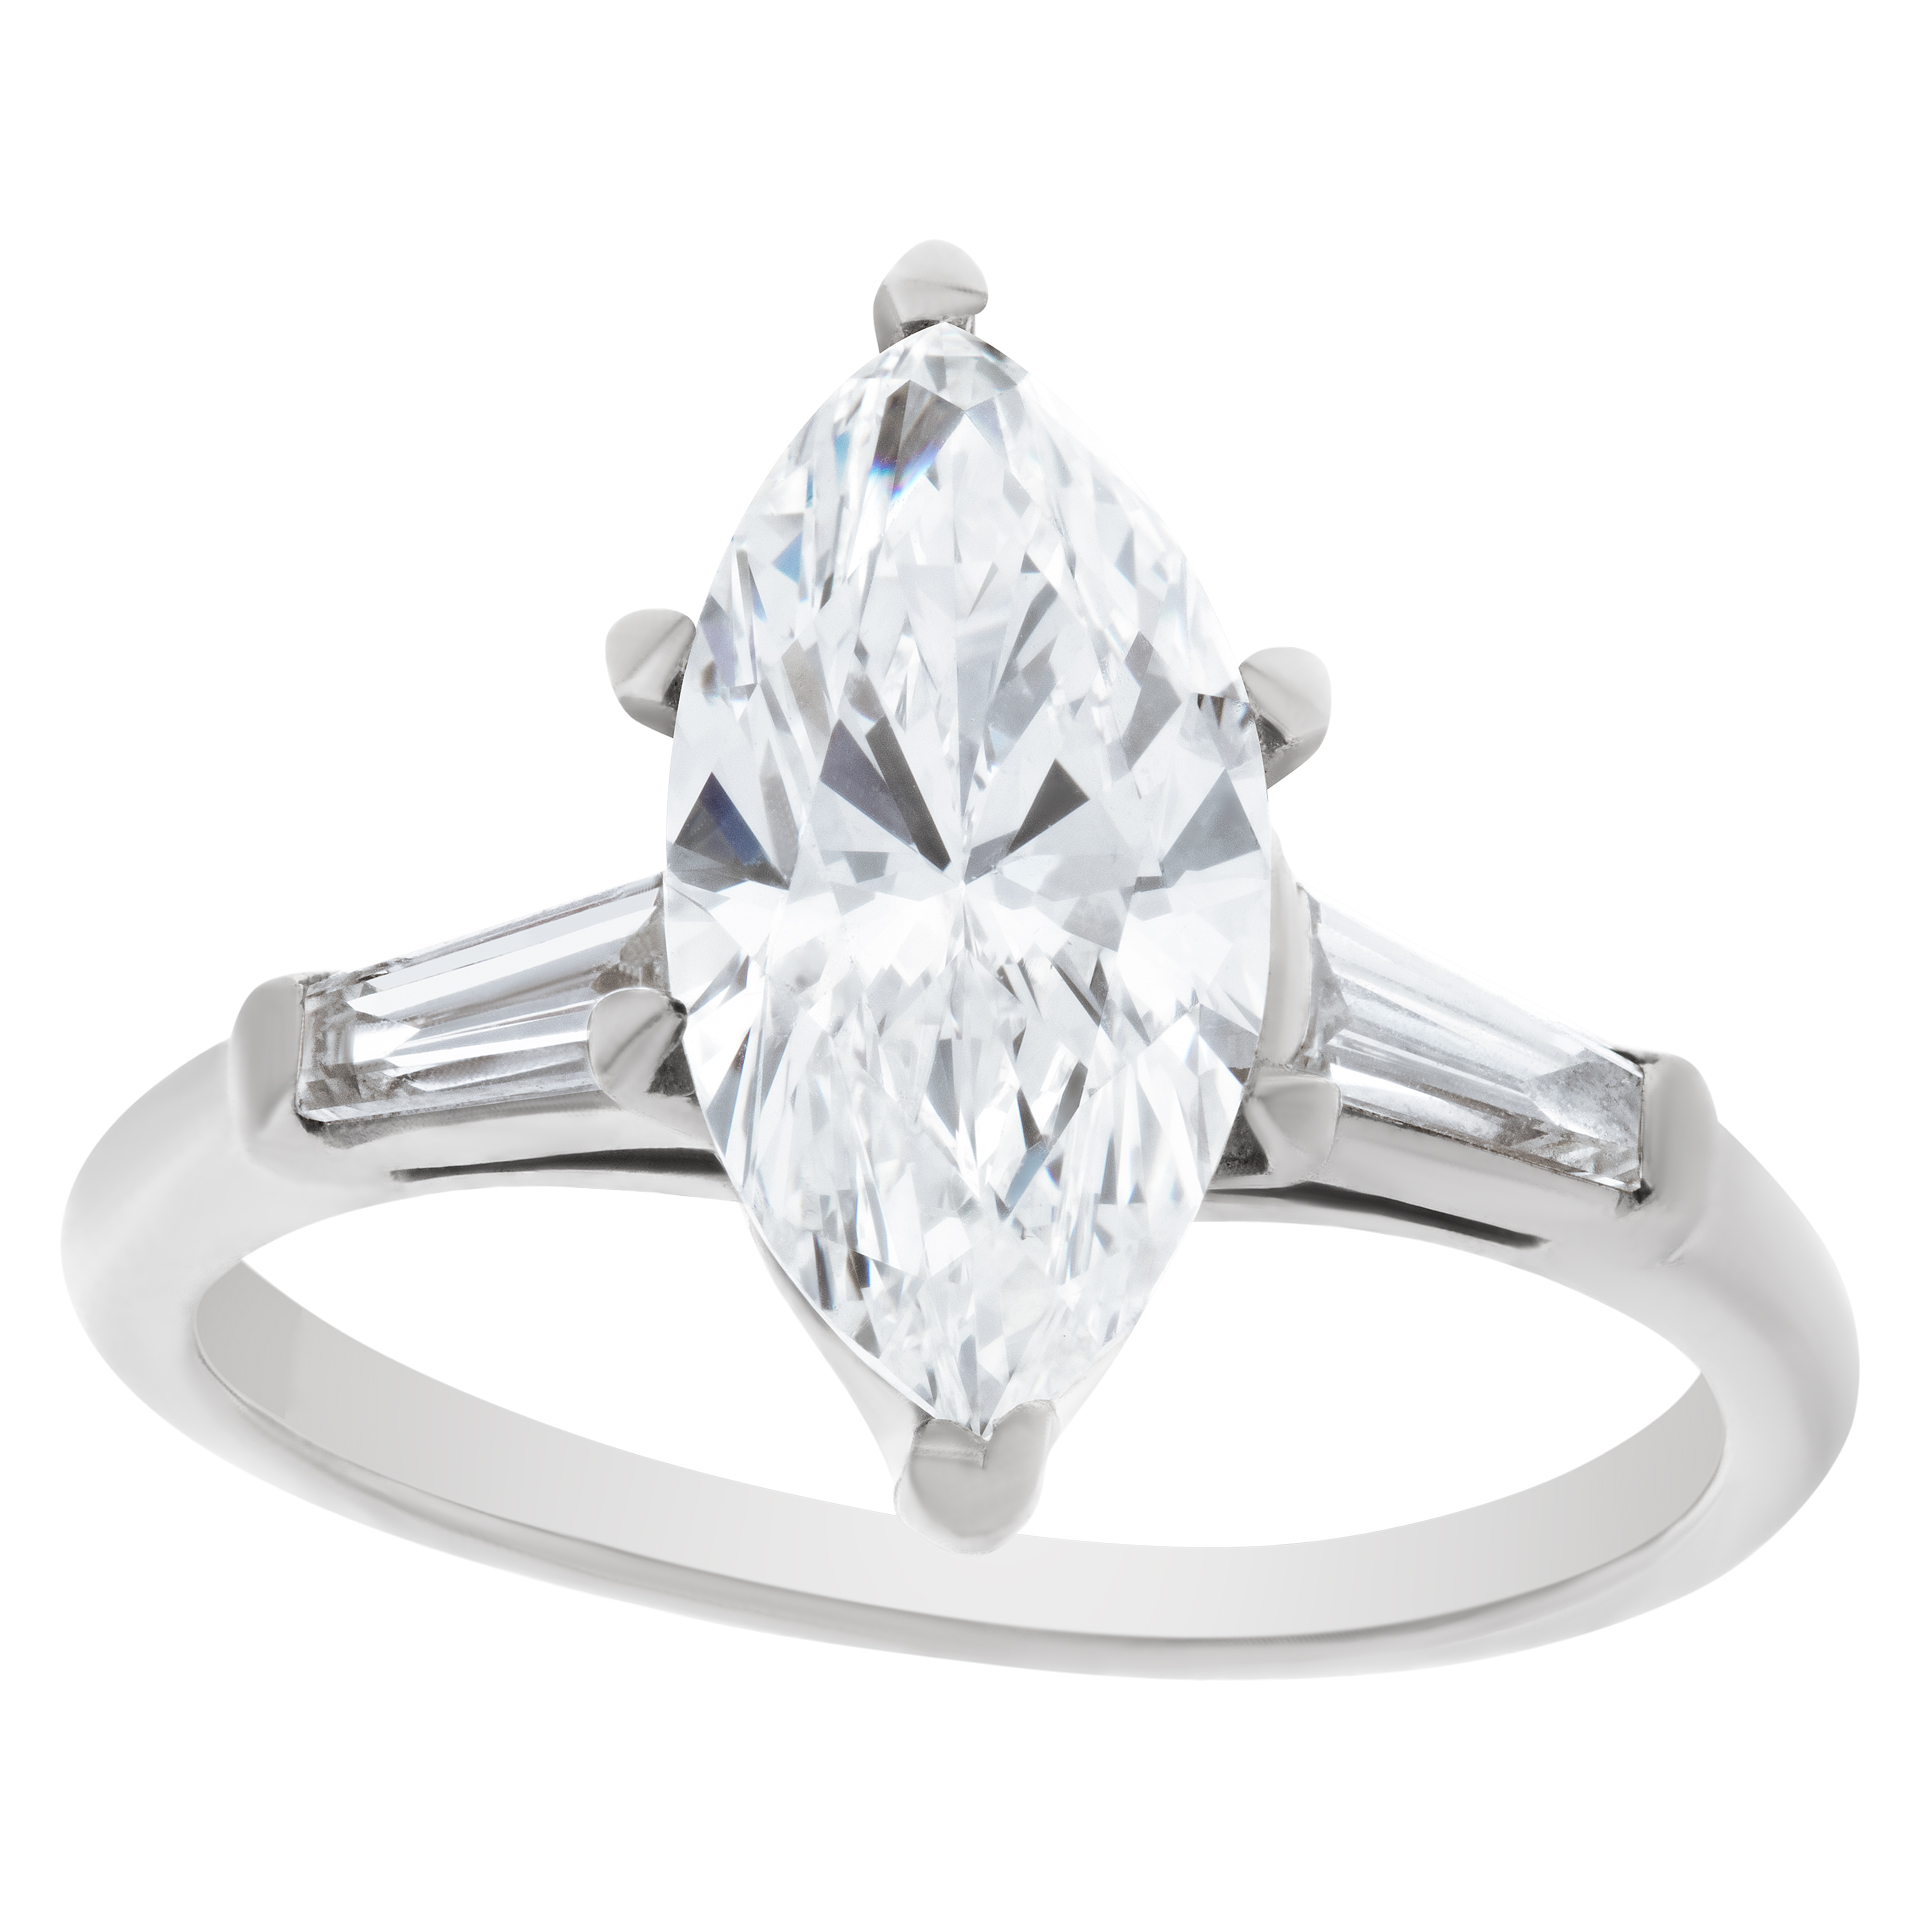 GIA certified marquise brilliant cut diamond  1.75 carat ( I color, VS1 clarity) image 1